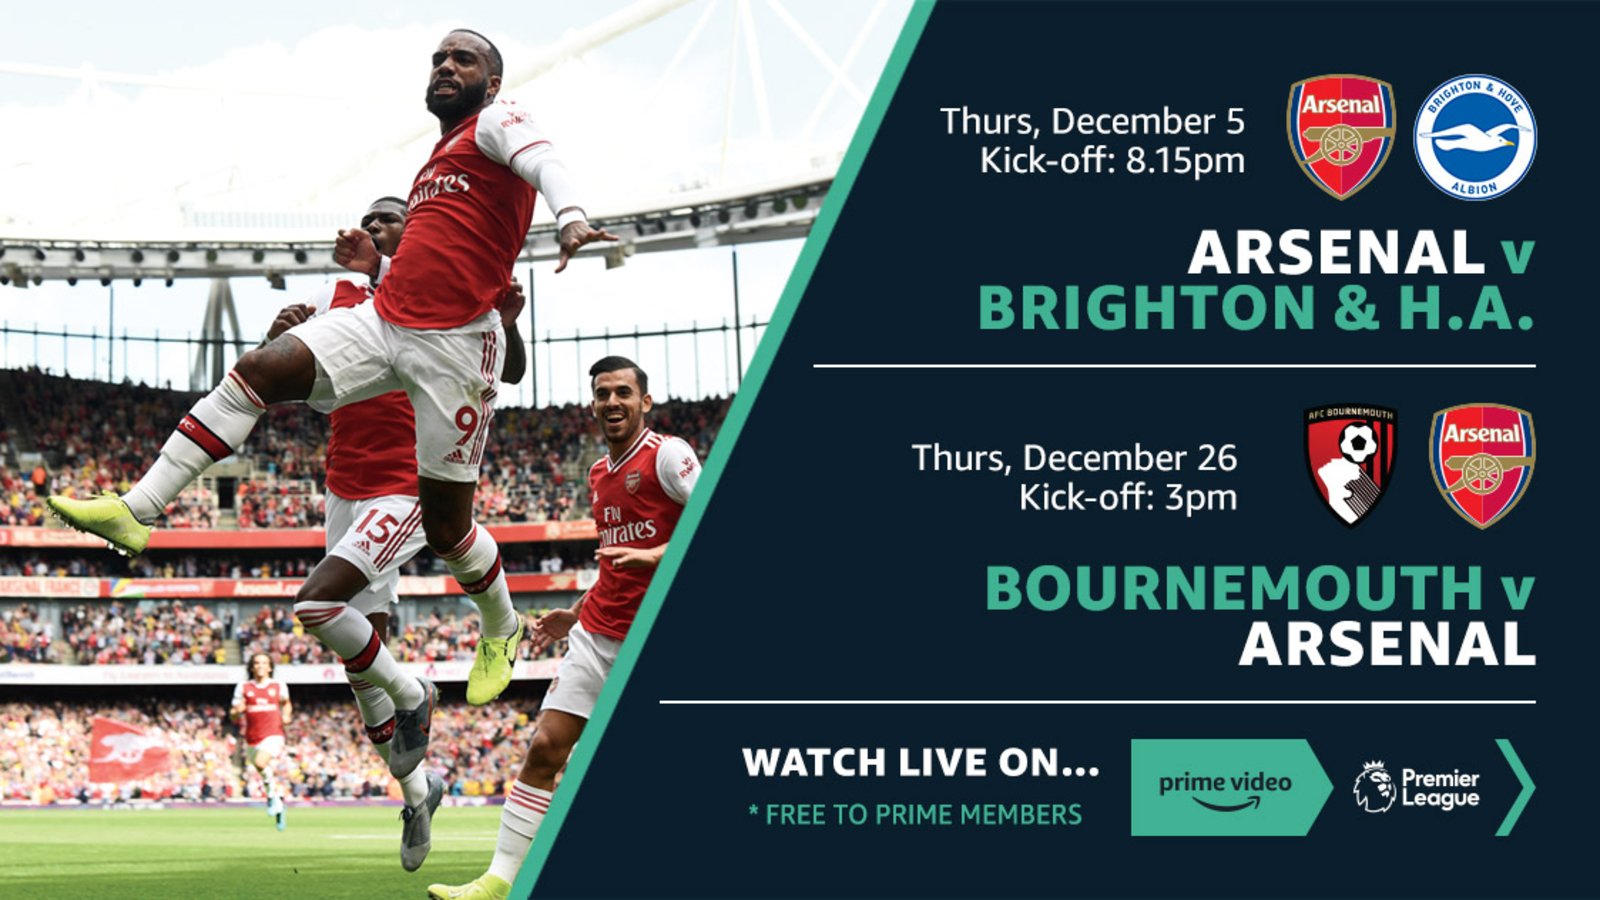 Arsenal games live on Amazon Prime Video Partner promotion News Arsenal